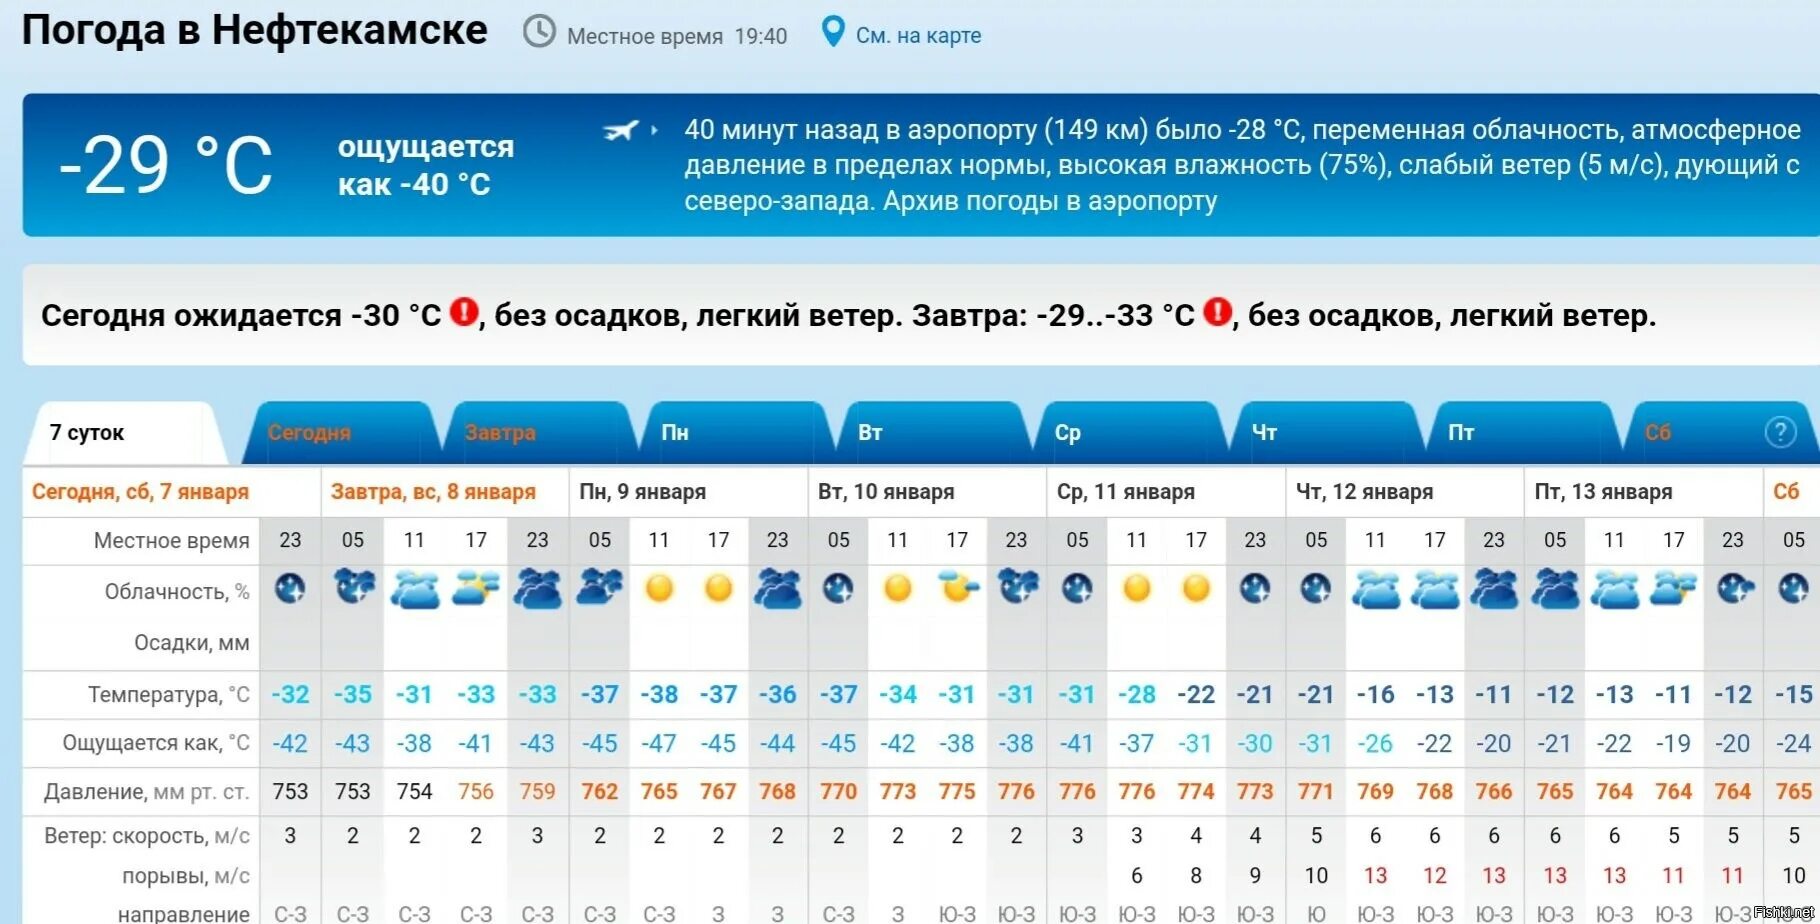 Погода старой майны рп5. Якутия температура. Якутск самая низкая температура. Самая низкая температура в яку. Якутск температура.